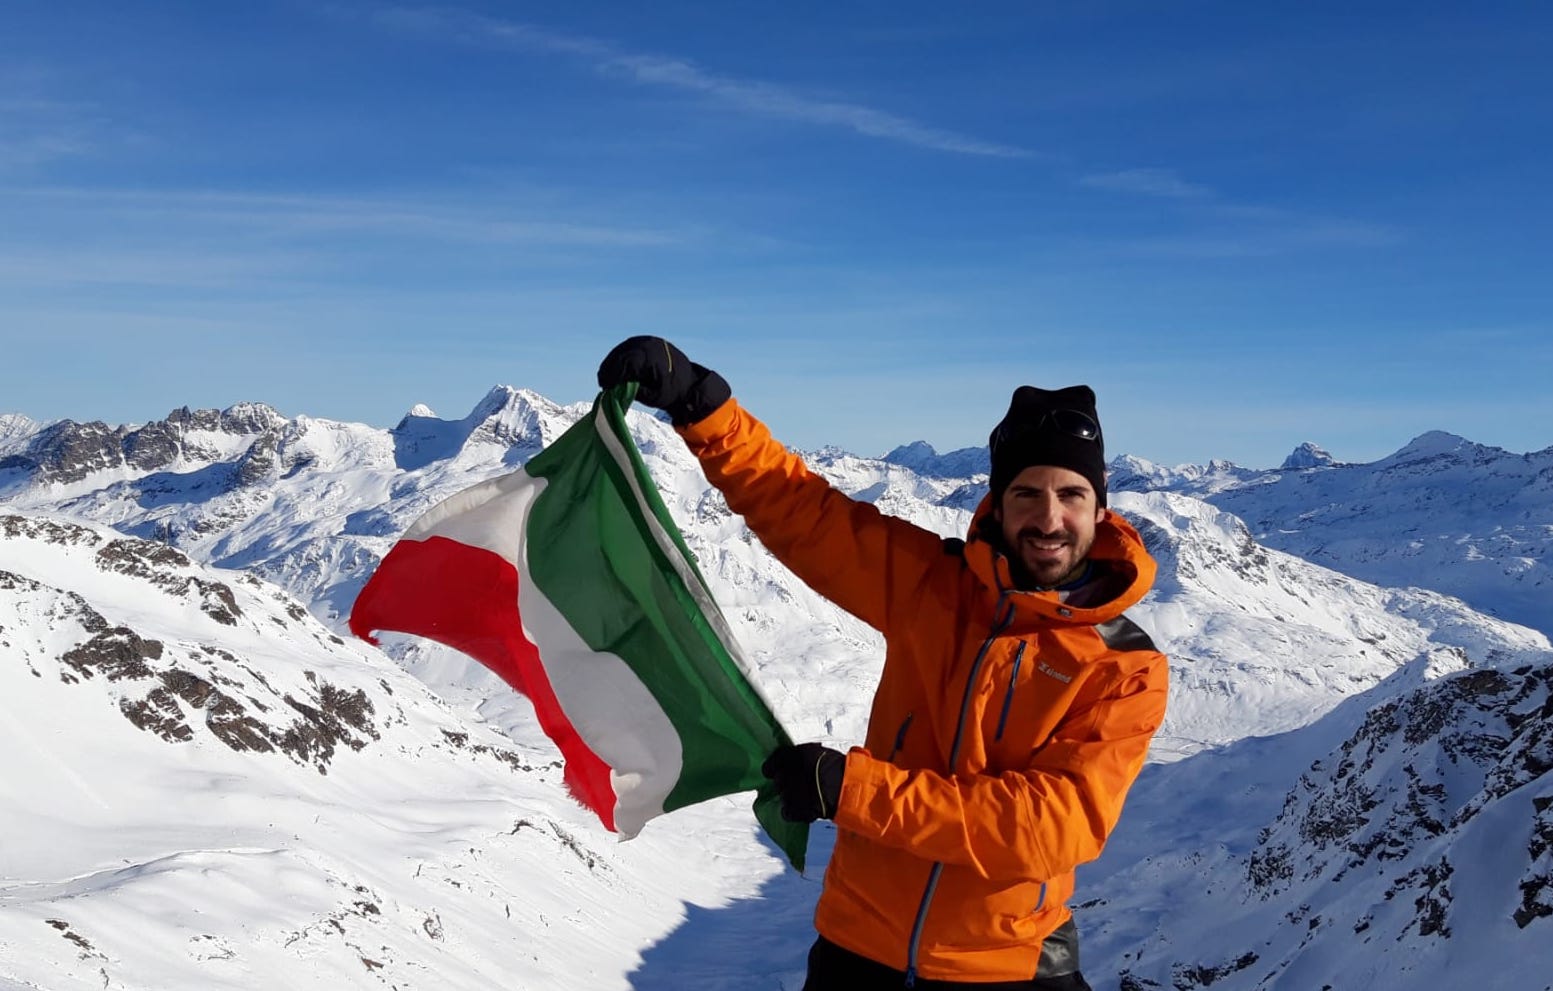 Riccardo Macchioro waving an Italian flag atop a snowy mountain